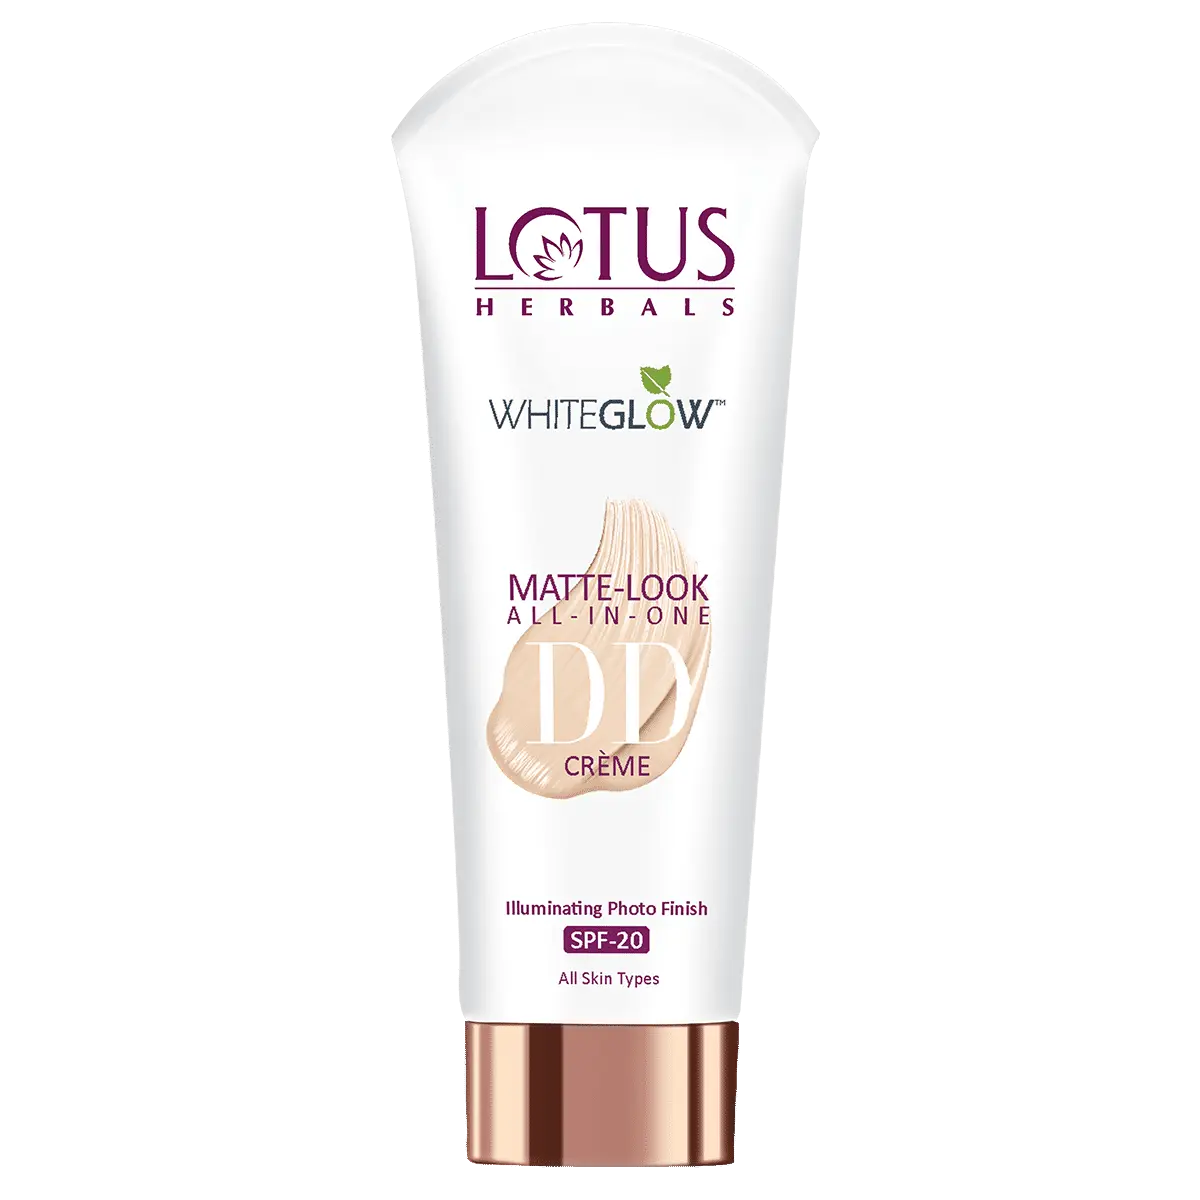 Lotus Herbals Whiteglow Matte Look All In One DD Cream - Natural Beige | SPF 20 | All Skin Types | 50g